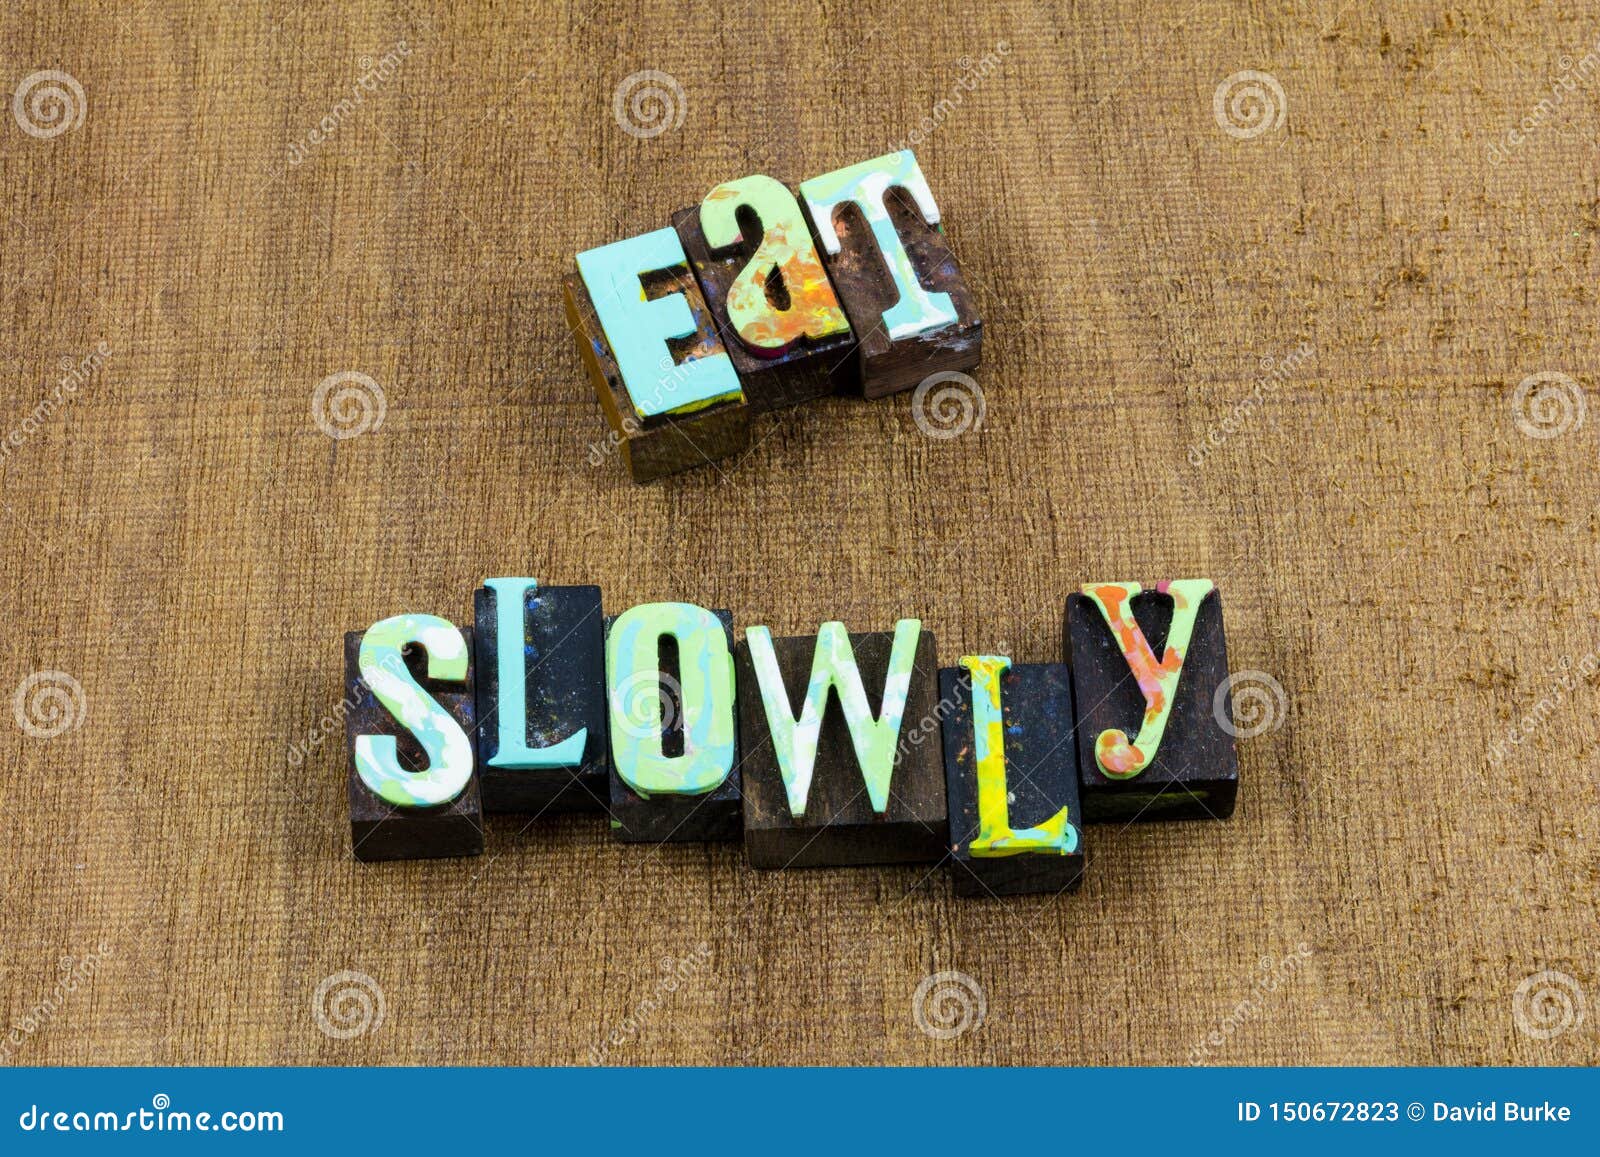 eat slowly habit patience love live life enjoy food